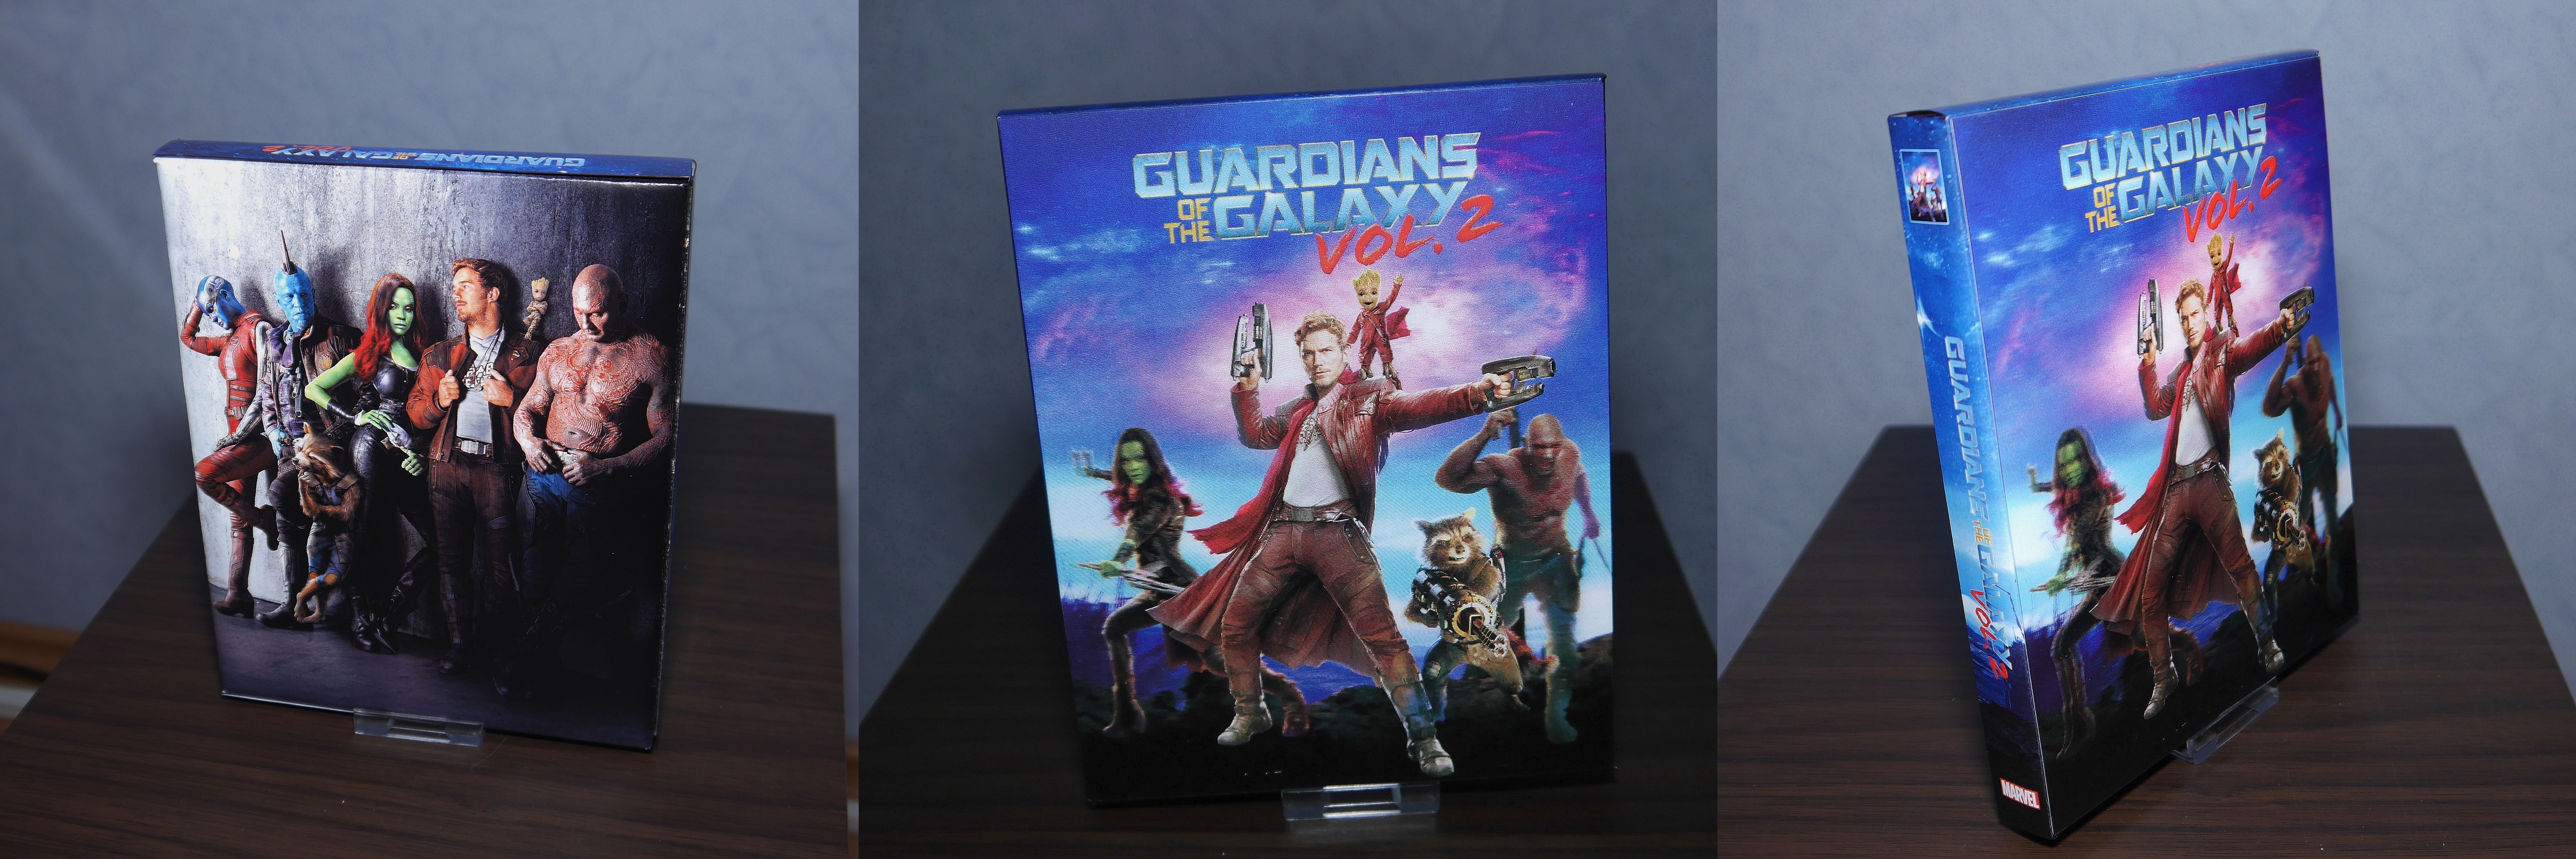 Guardians of the Galaxy 2 Zesty Custom Slipcover Lenticular